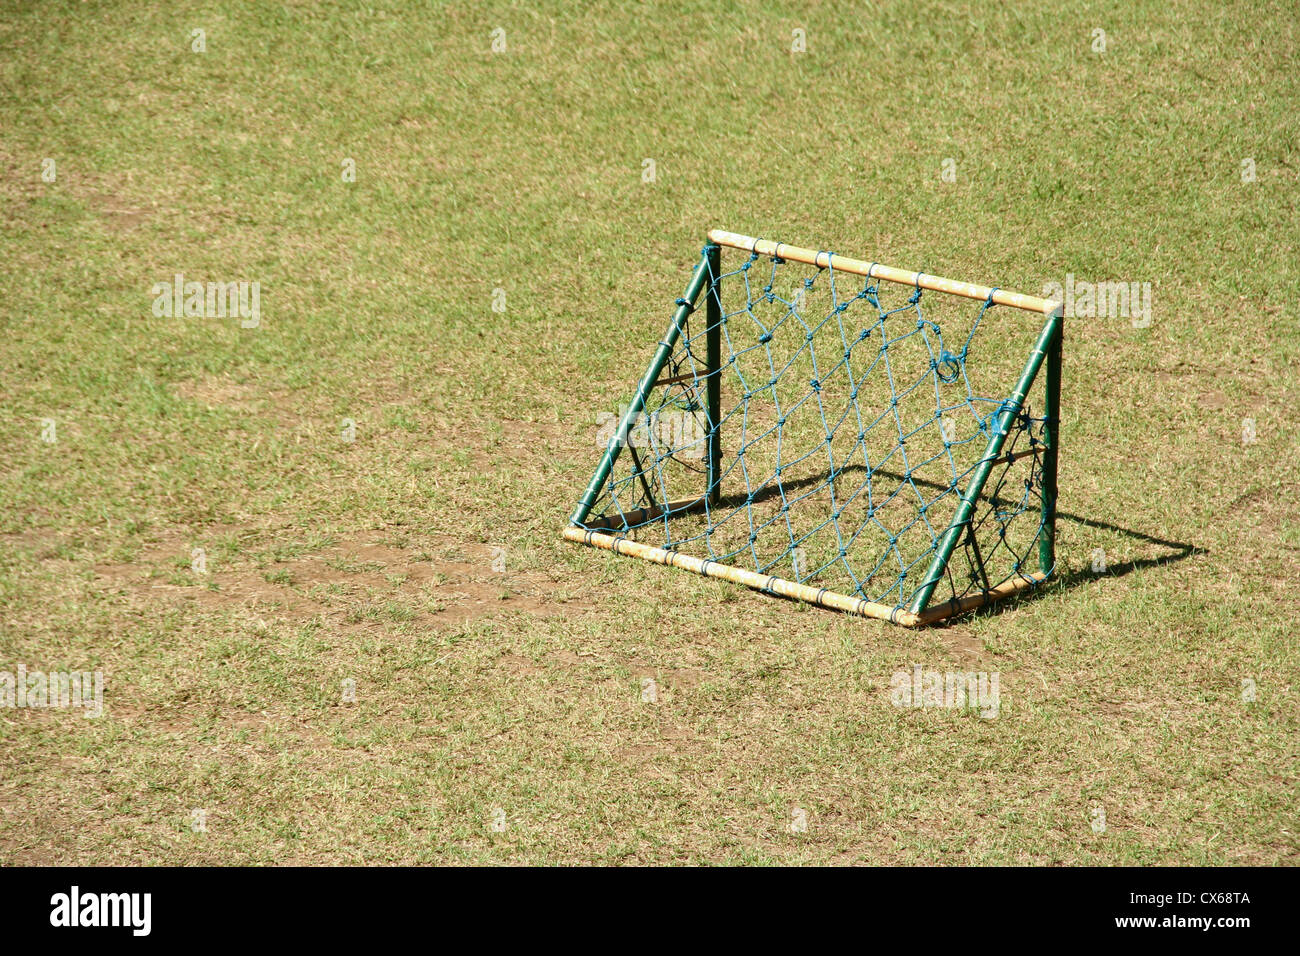 A mini soccer goal for kids on a mini soccer field. Stock Photo